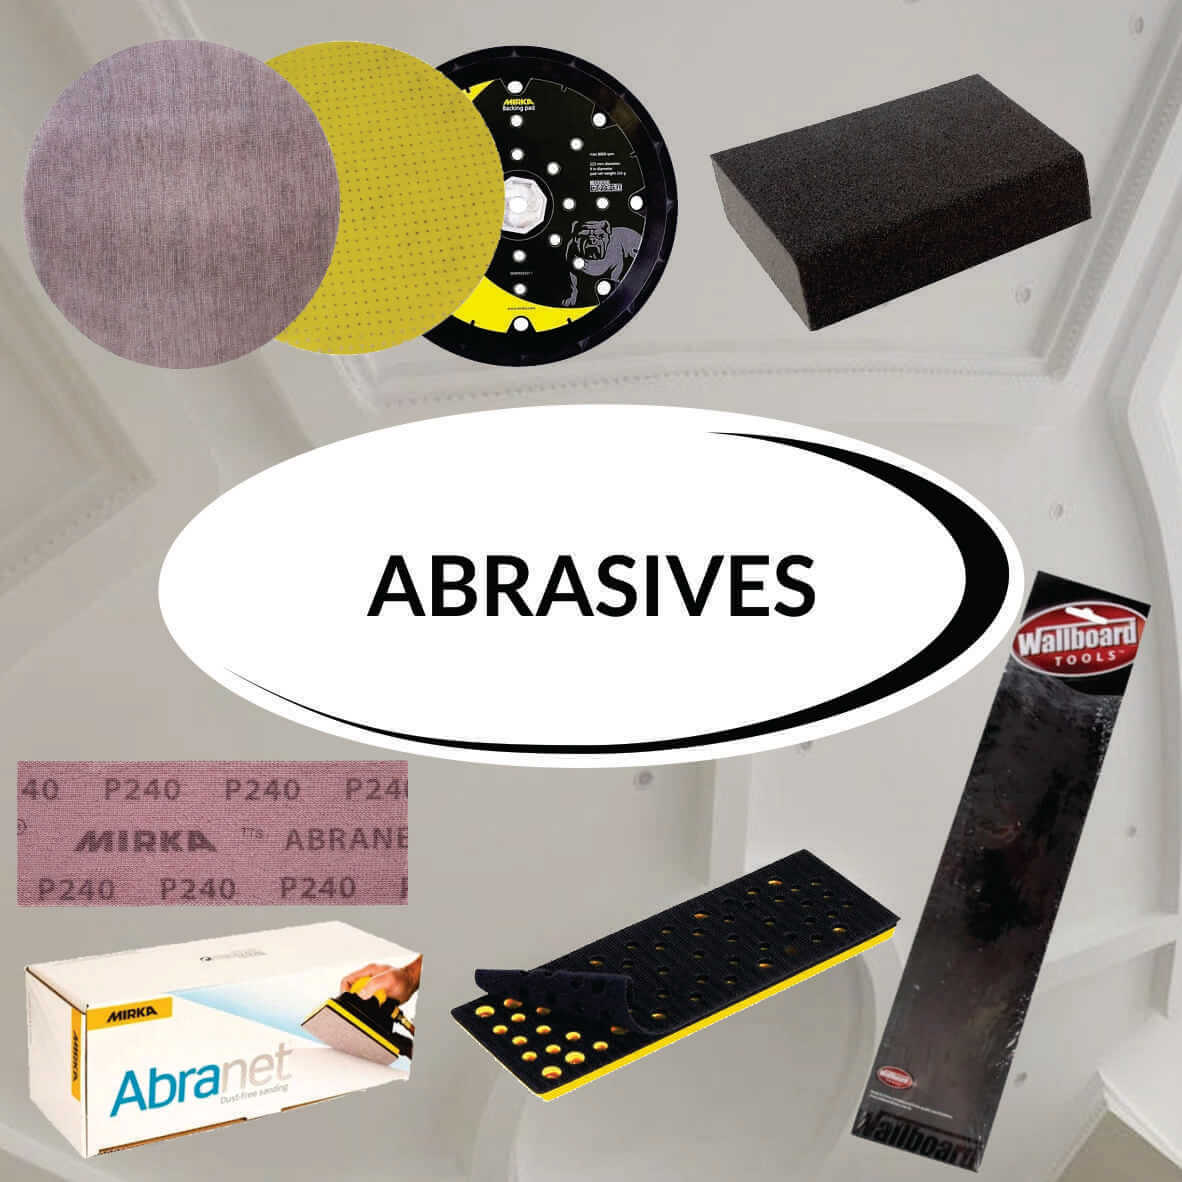 Abrasives